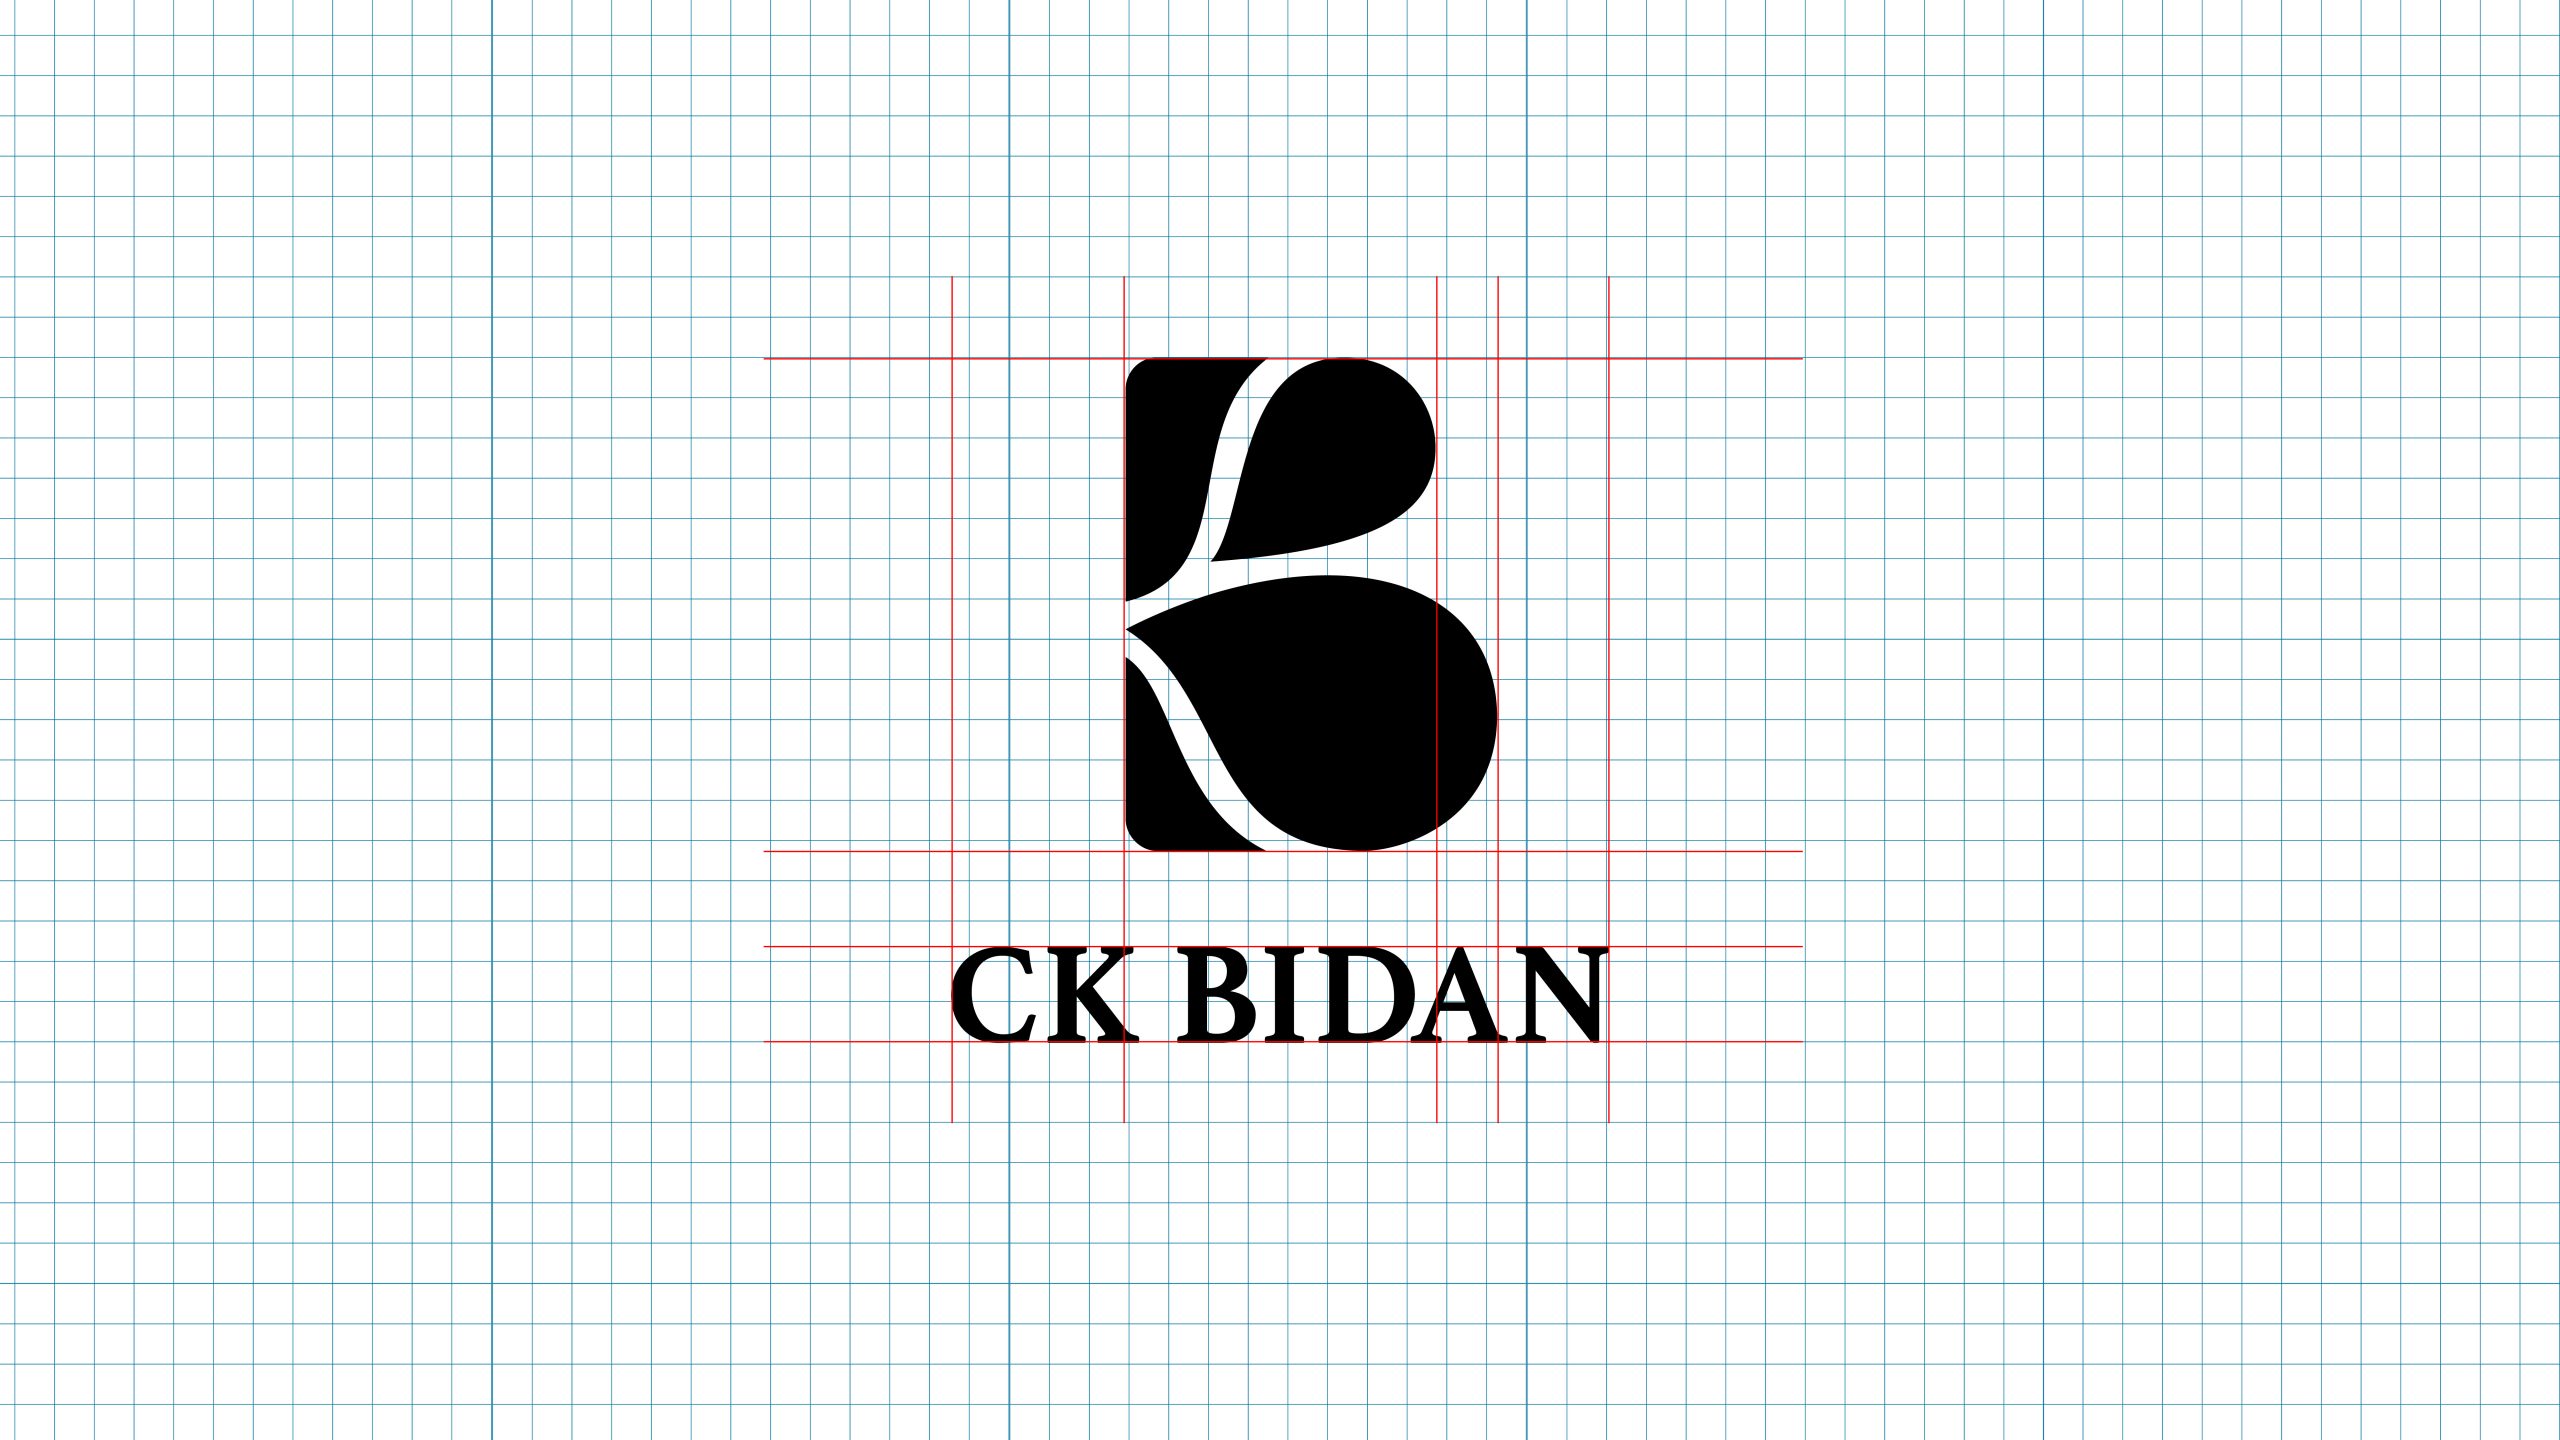 CKBIDAN_logo_290622-13